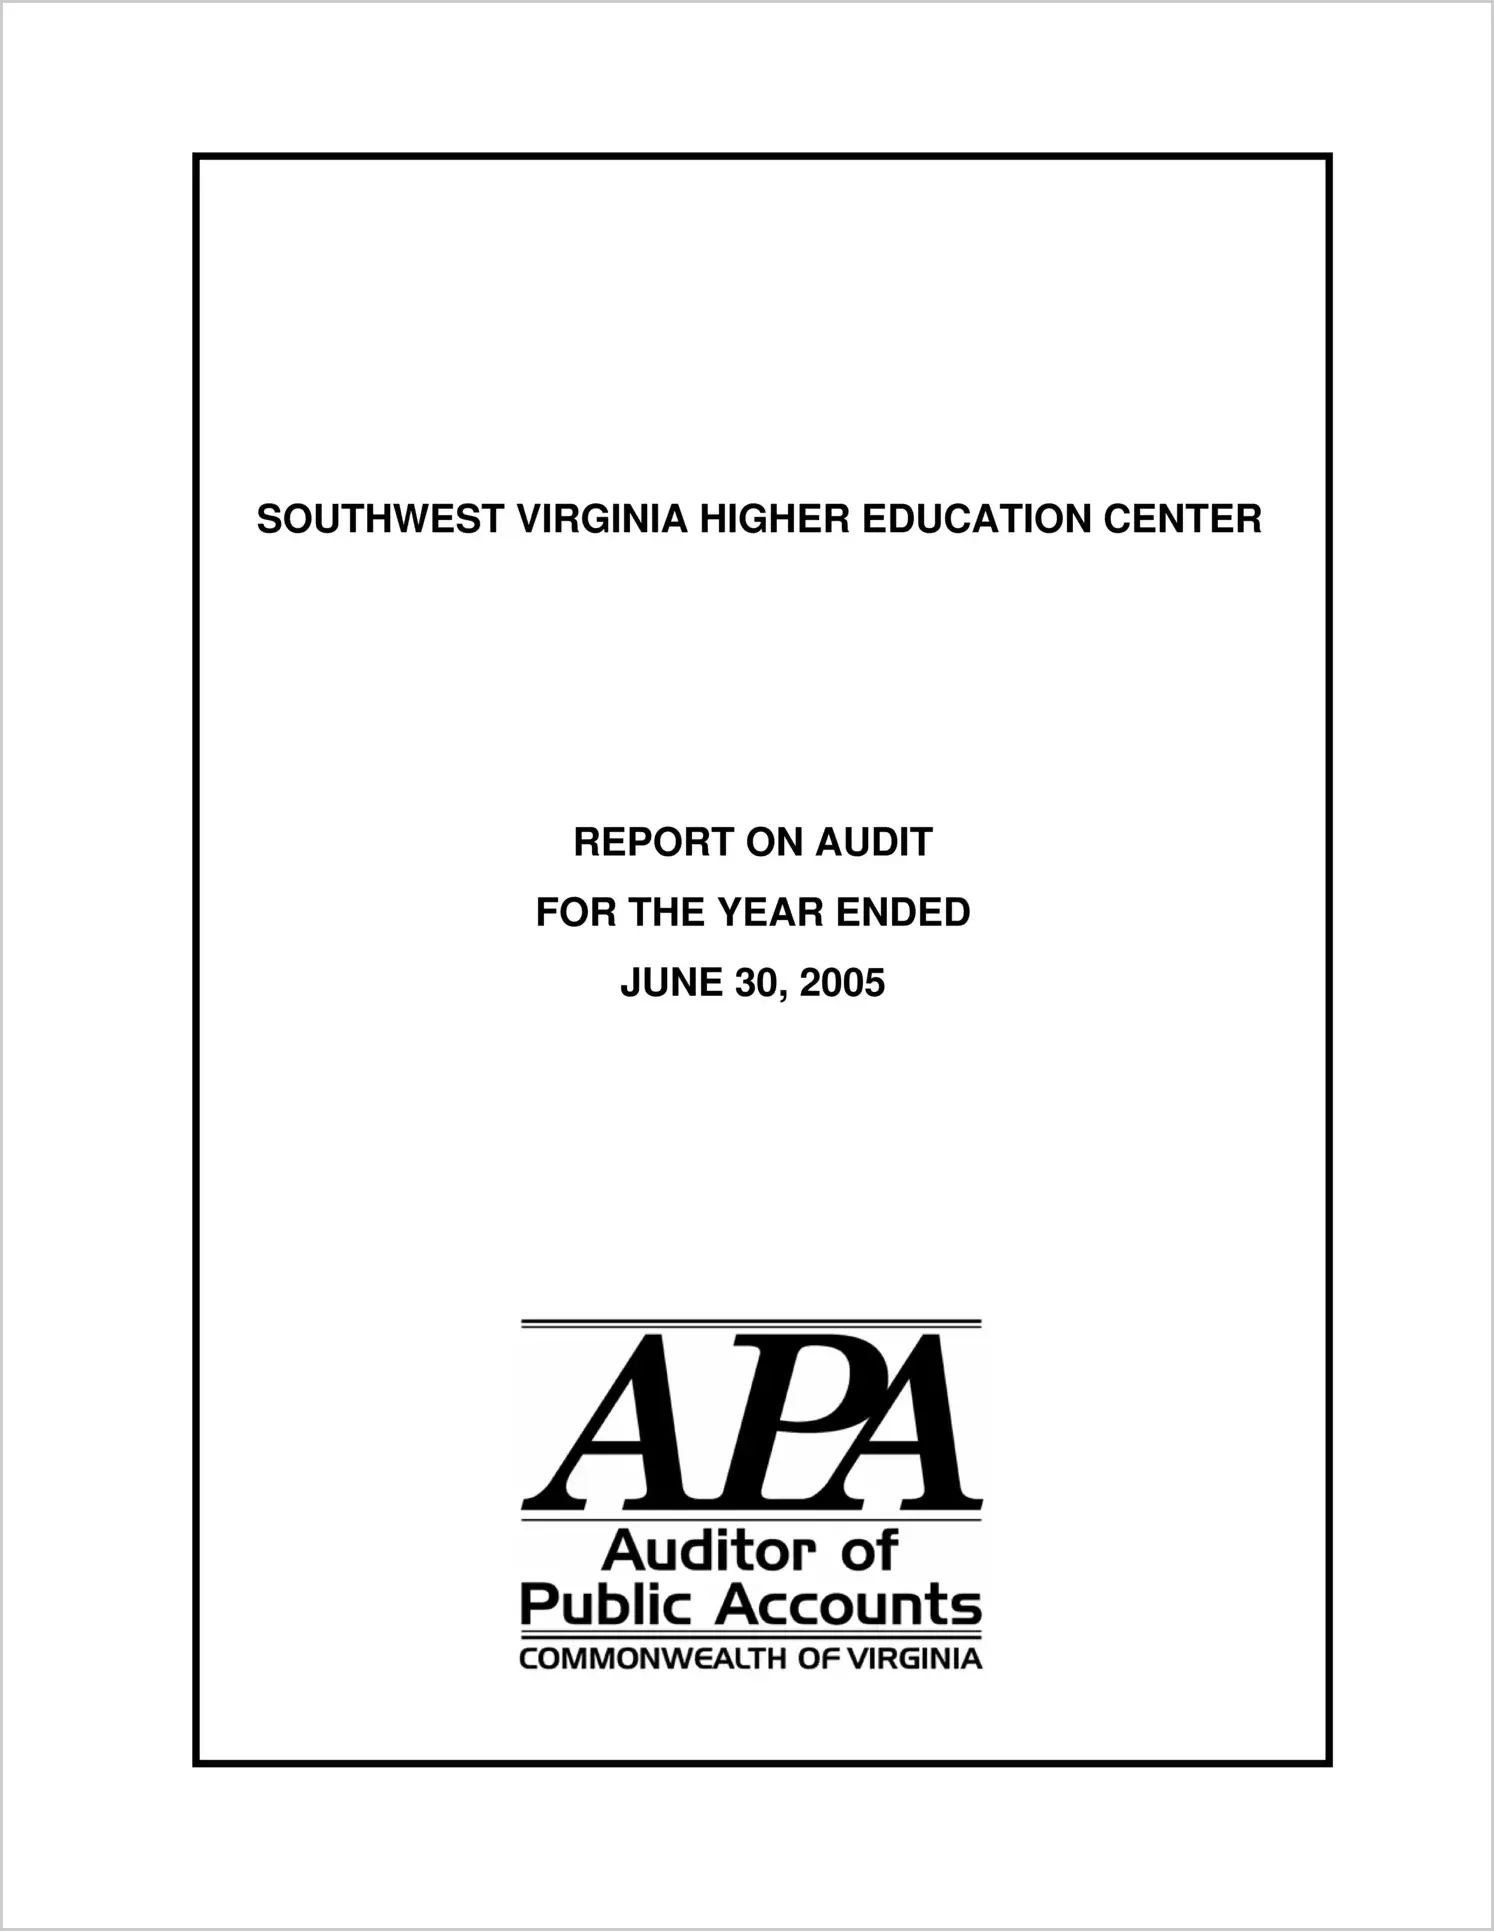 Southwest Virginia Higher Education Center for the year ended June 30, 2005